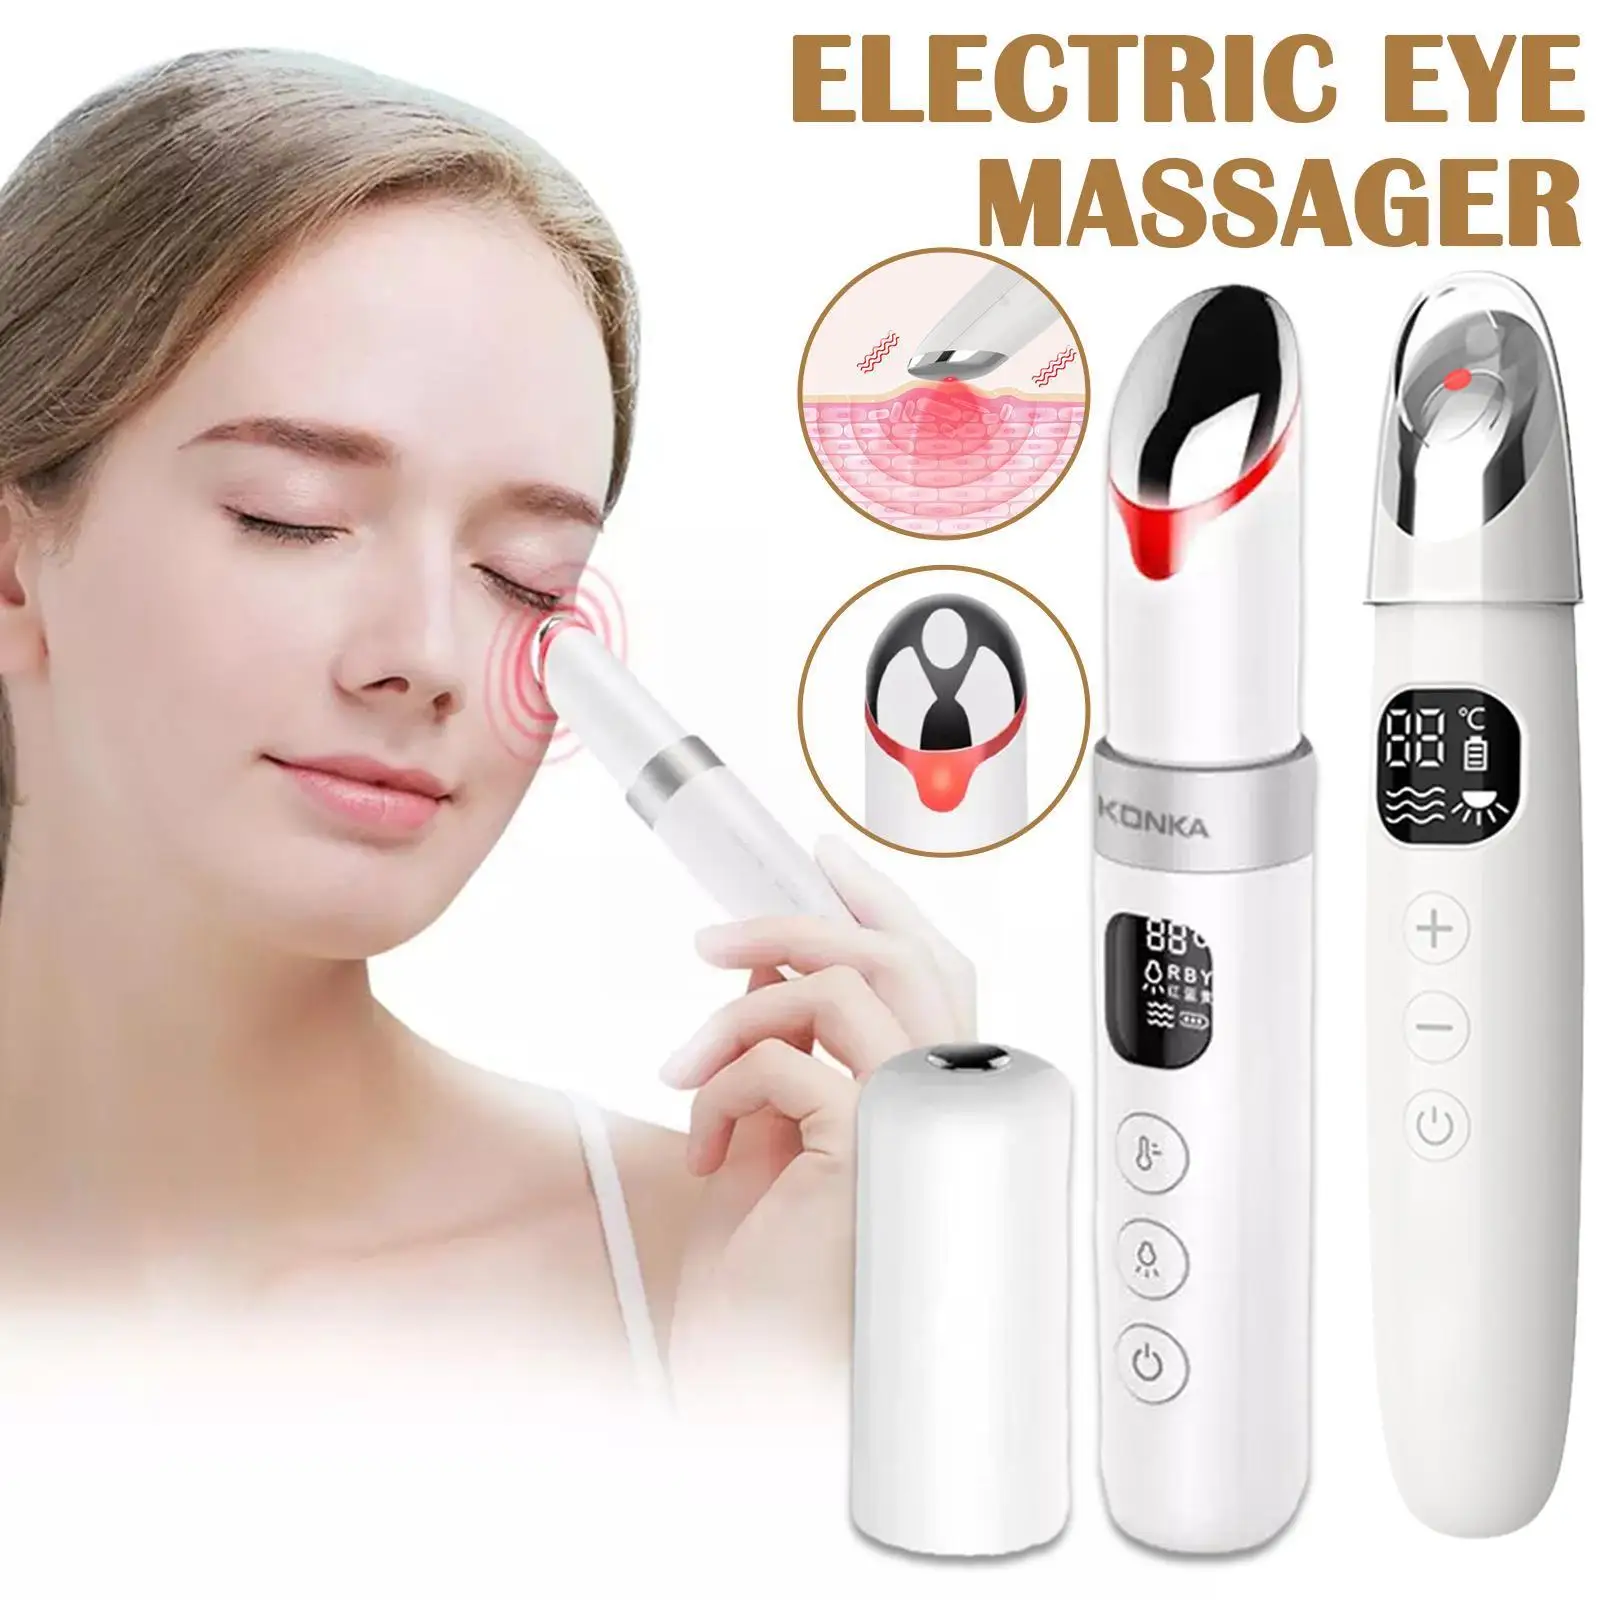 

Electric Eye Massager Vibration 45℃ Hot Massage Relax Eye Therapy Eyes Care Skin Skin Anti Wrinkle Photo Tool Ems Lift Age J9g8